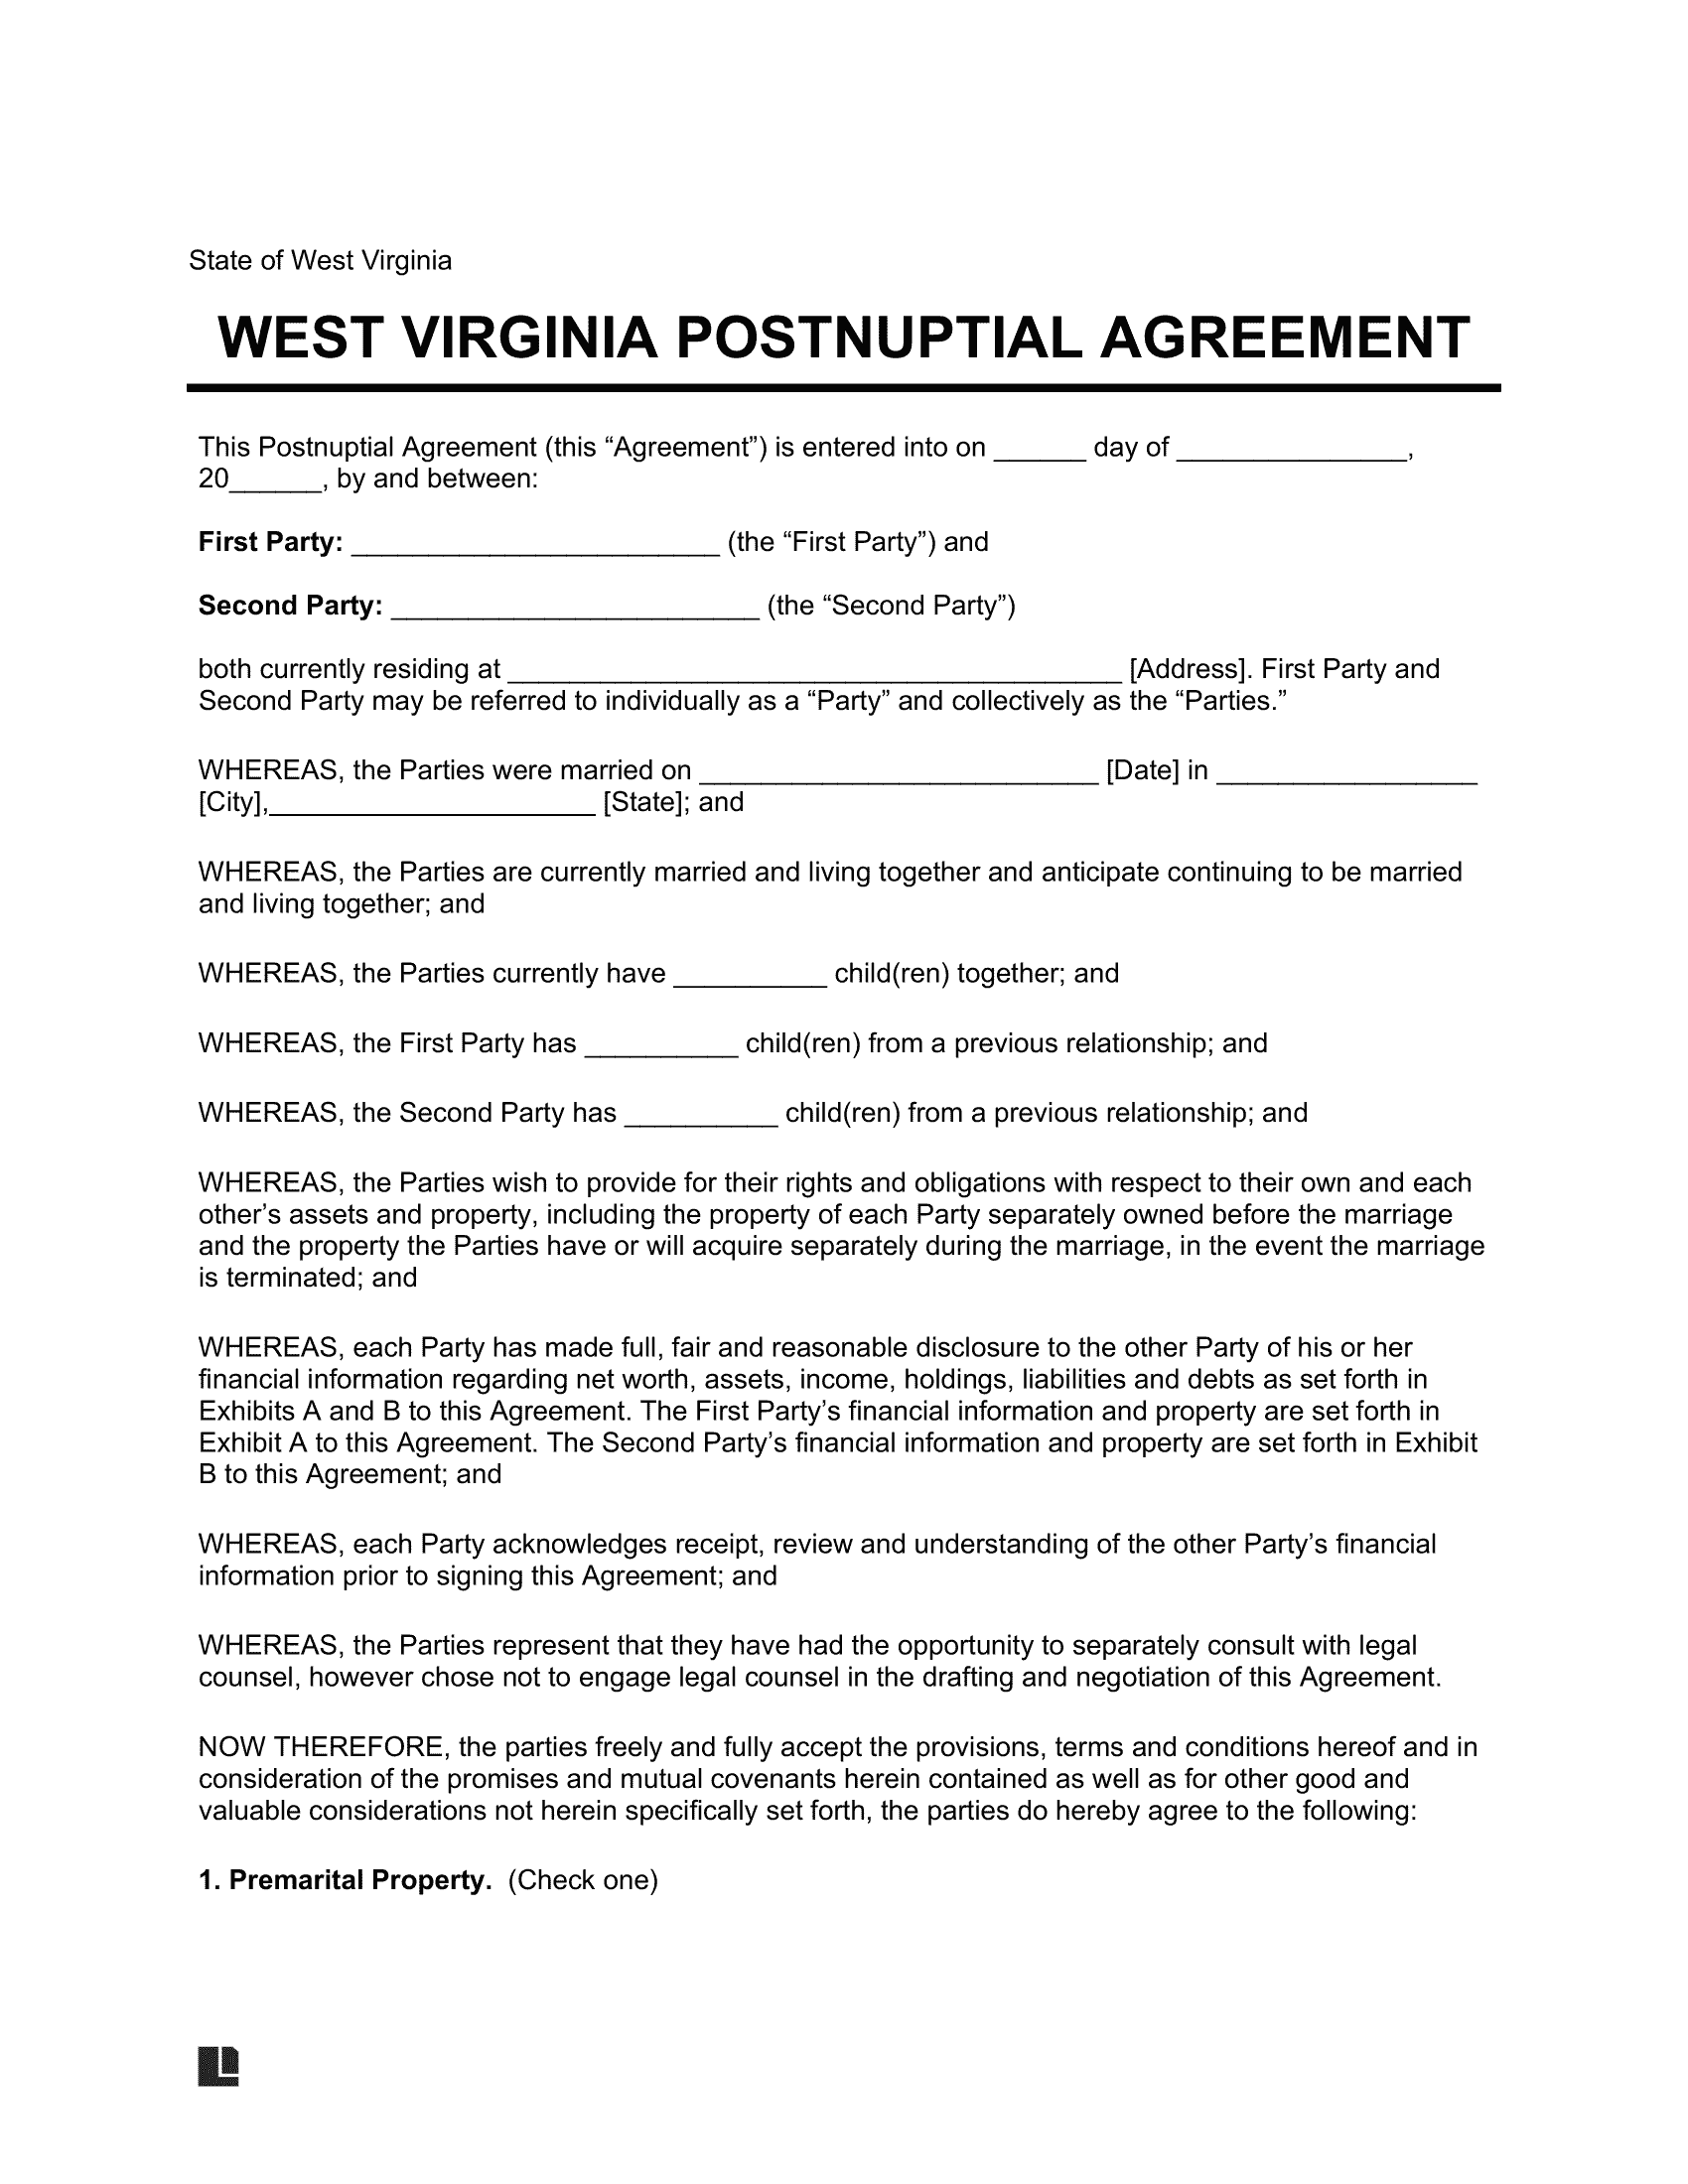 West Virginia Postnuptial Agreement Template